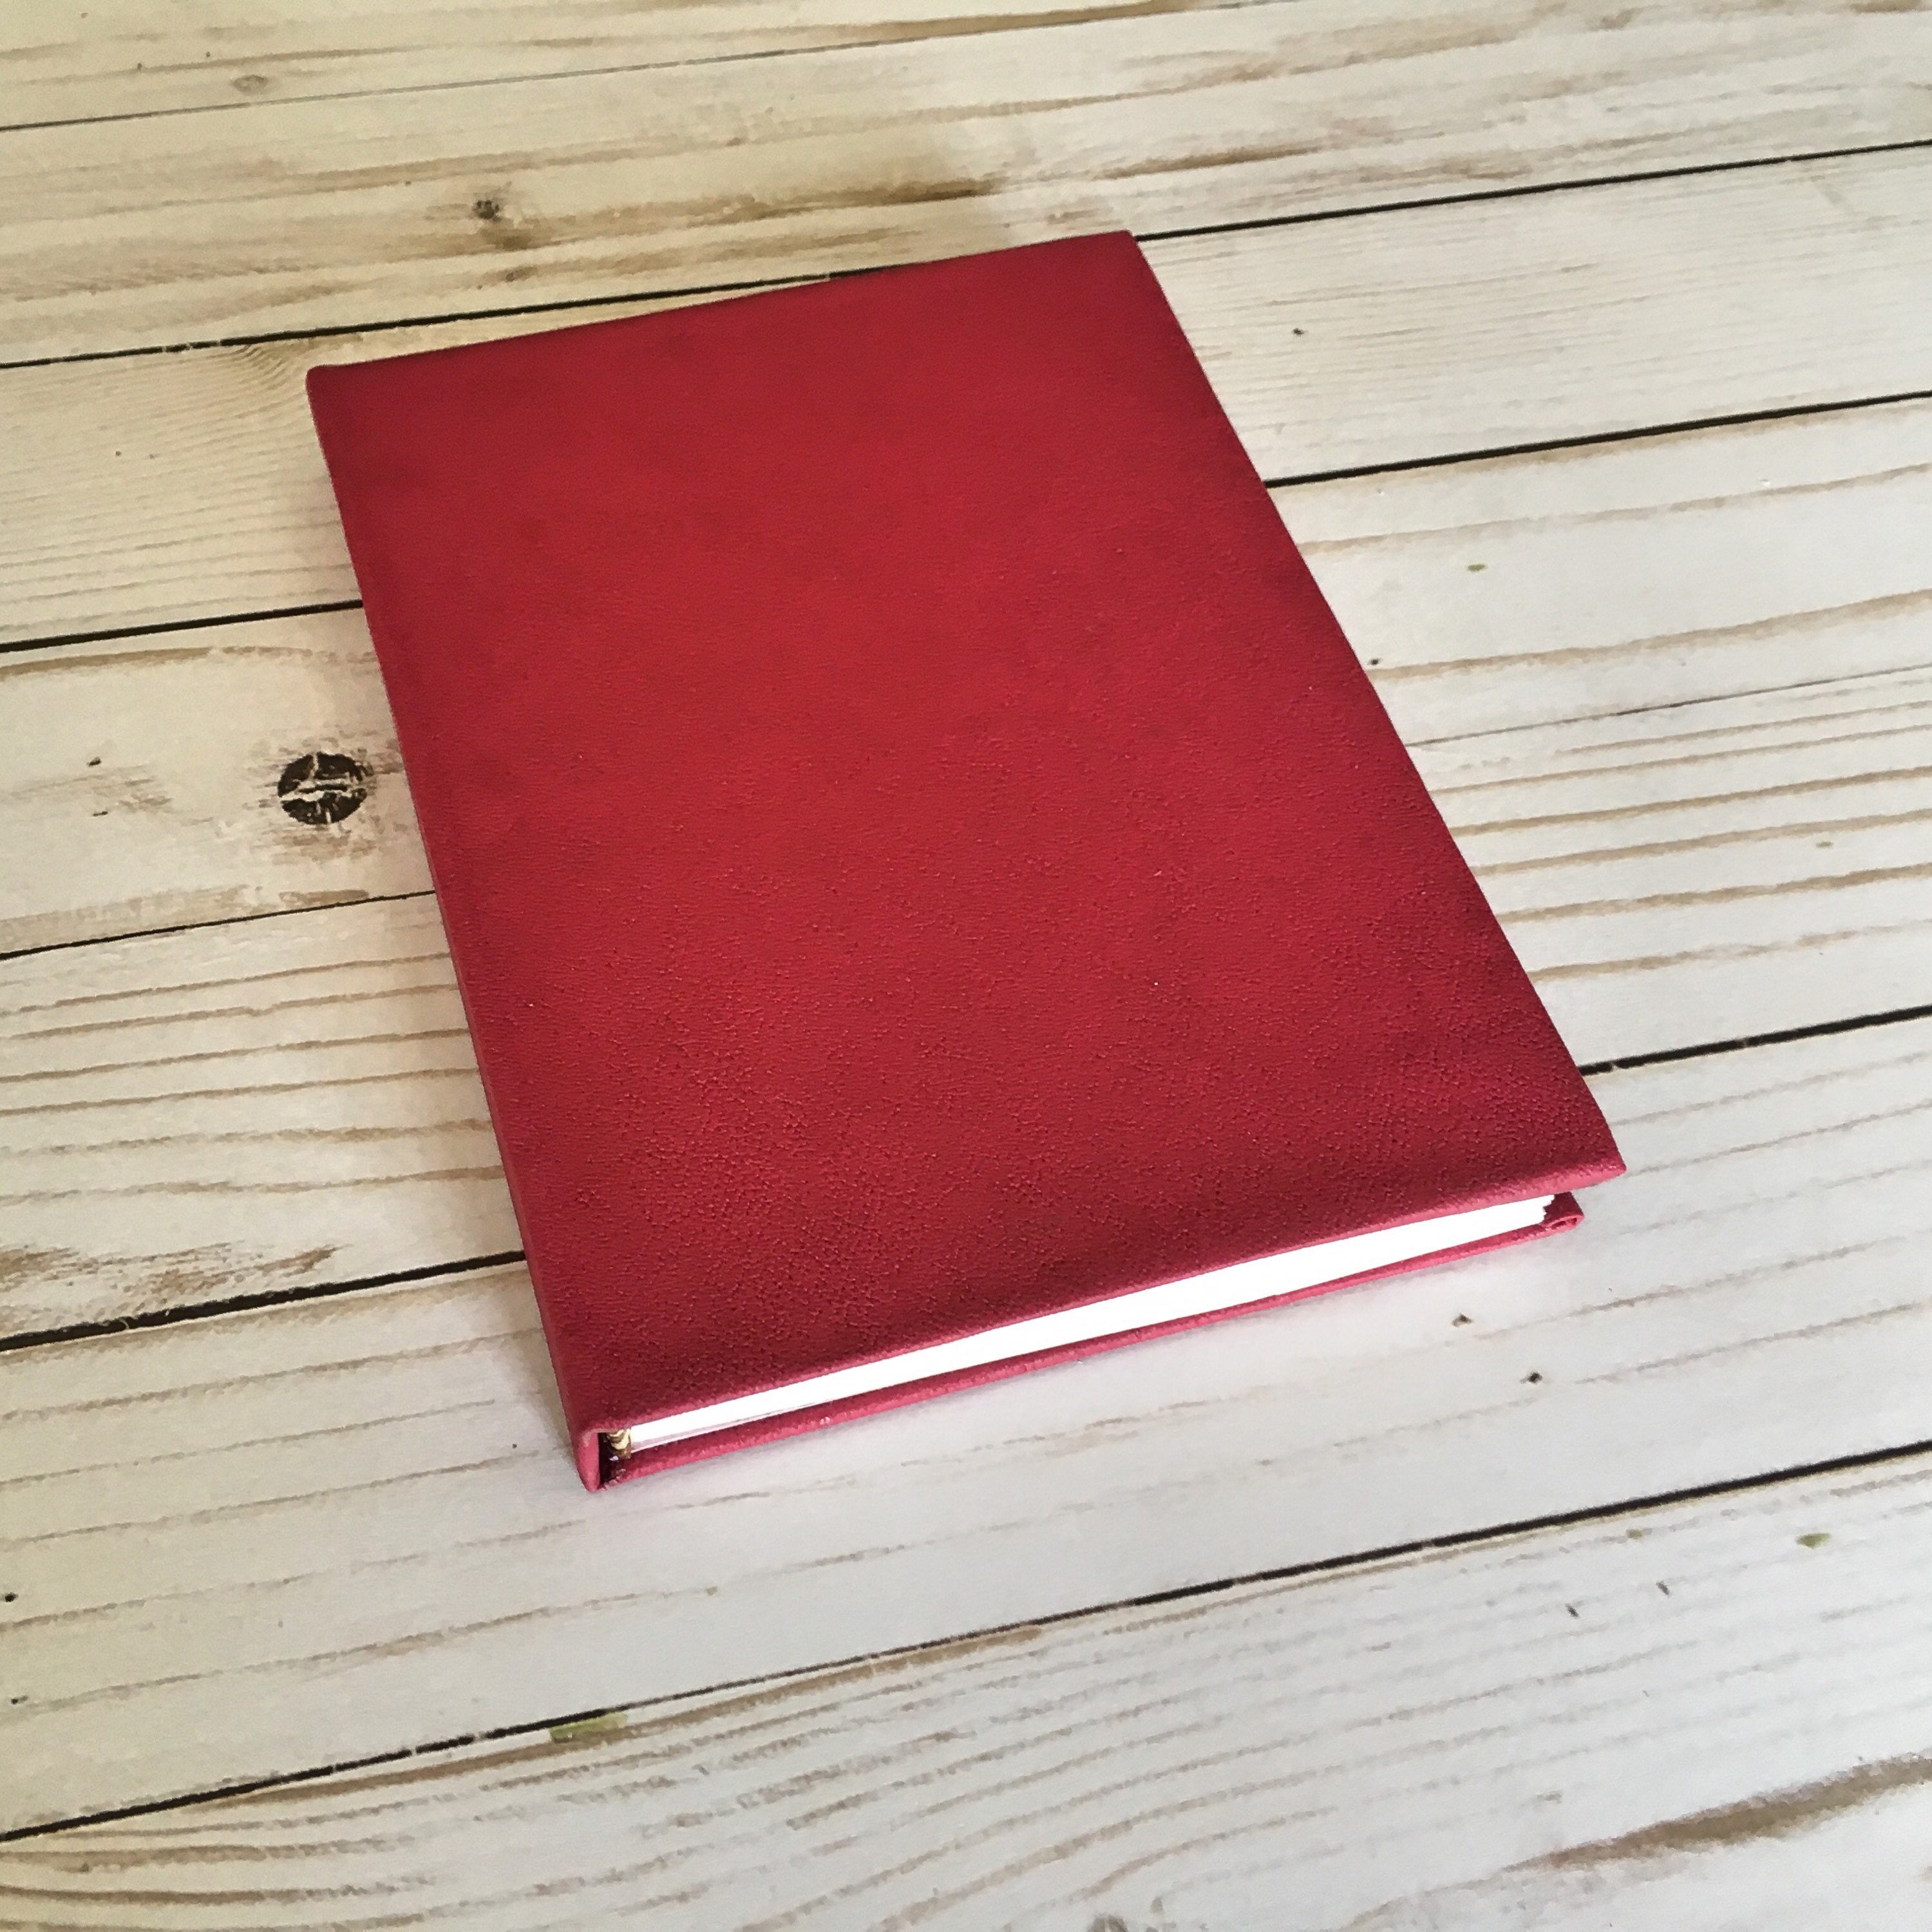  COOPHYA 1 Roll Book Band DIY Kits Book Binding Fabric Book  Binding Strap Fun Office Supplies Polyester Red Album Binding Belts DIY  Binder Bands DIY Headbands for Hardcover Book Self